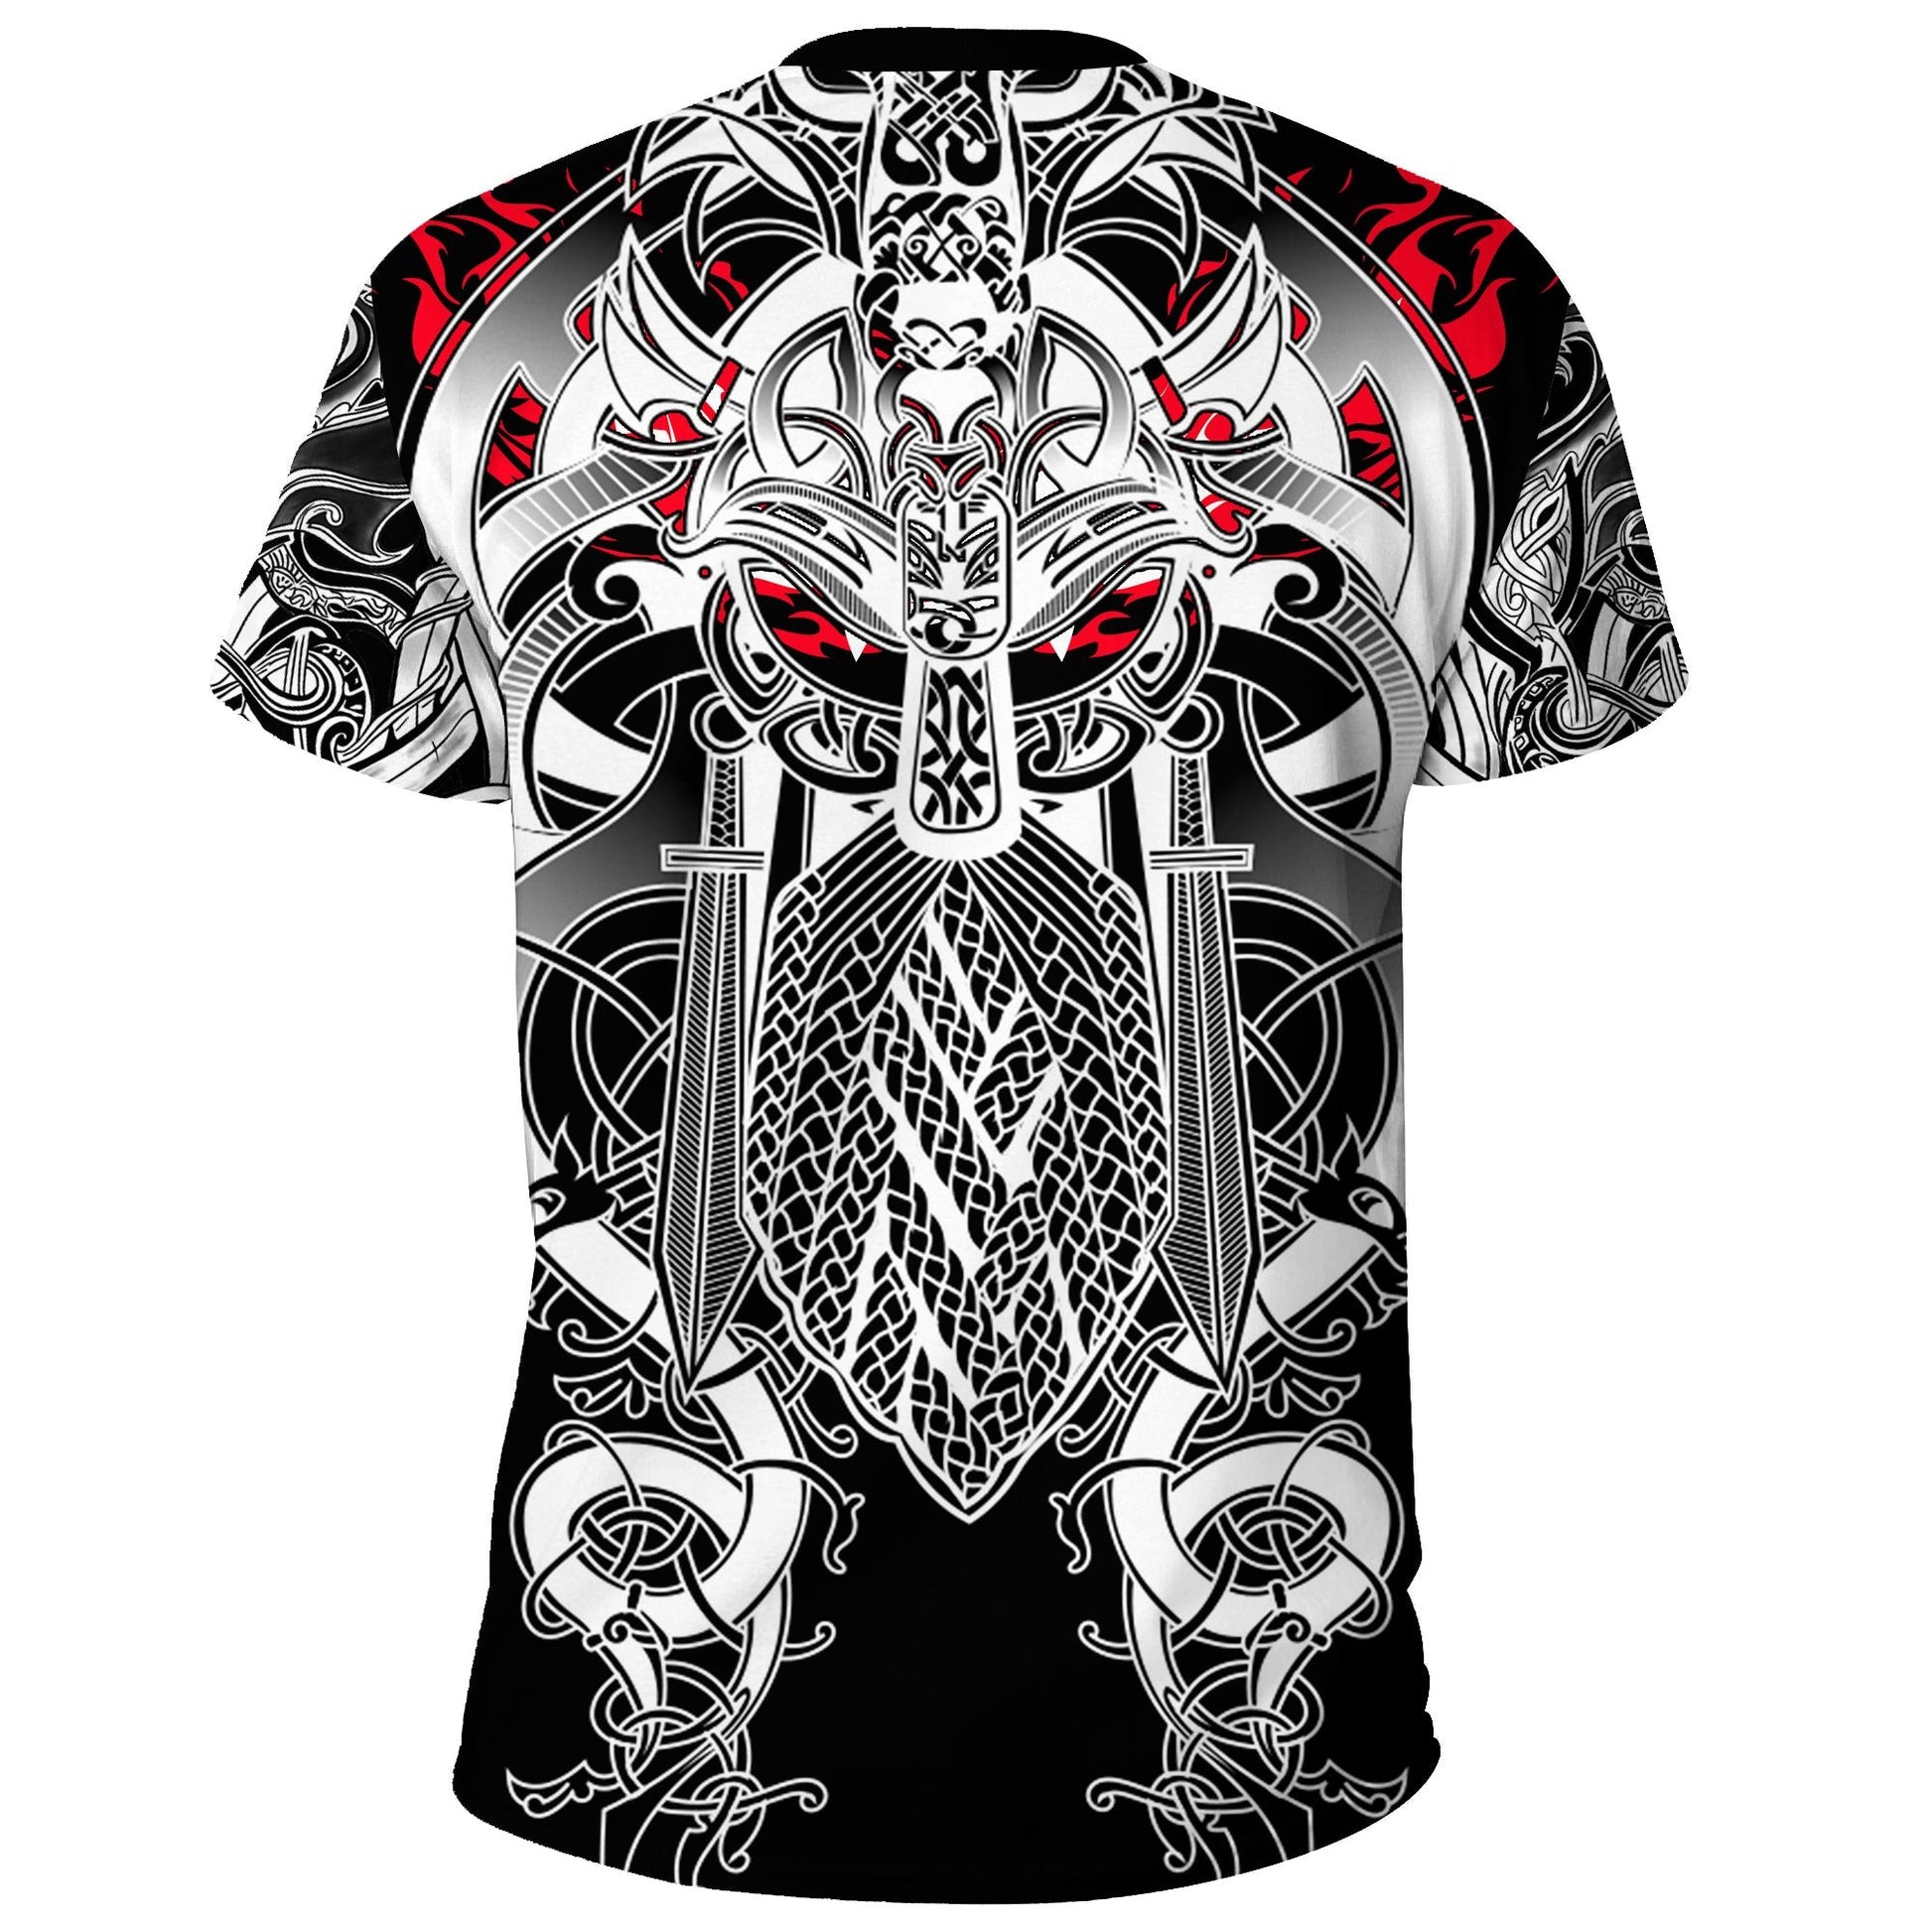  Viking Shirt Viking Odin Eternal Flame Norse Art Style Black White Red T-shirt Adult Full Size